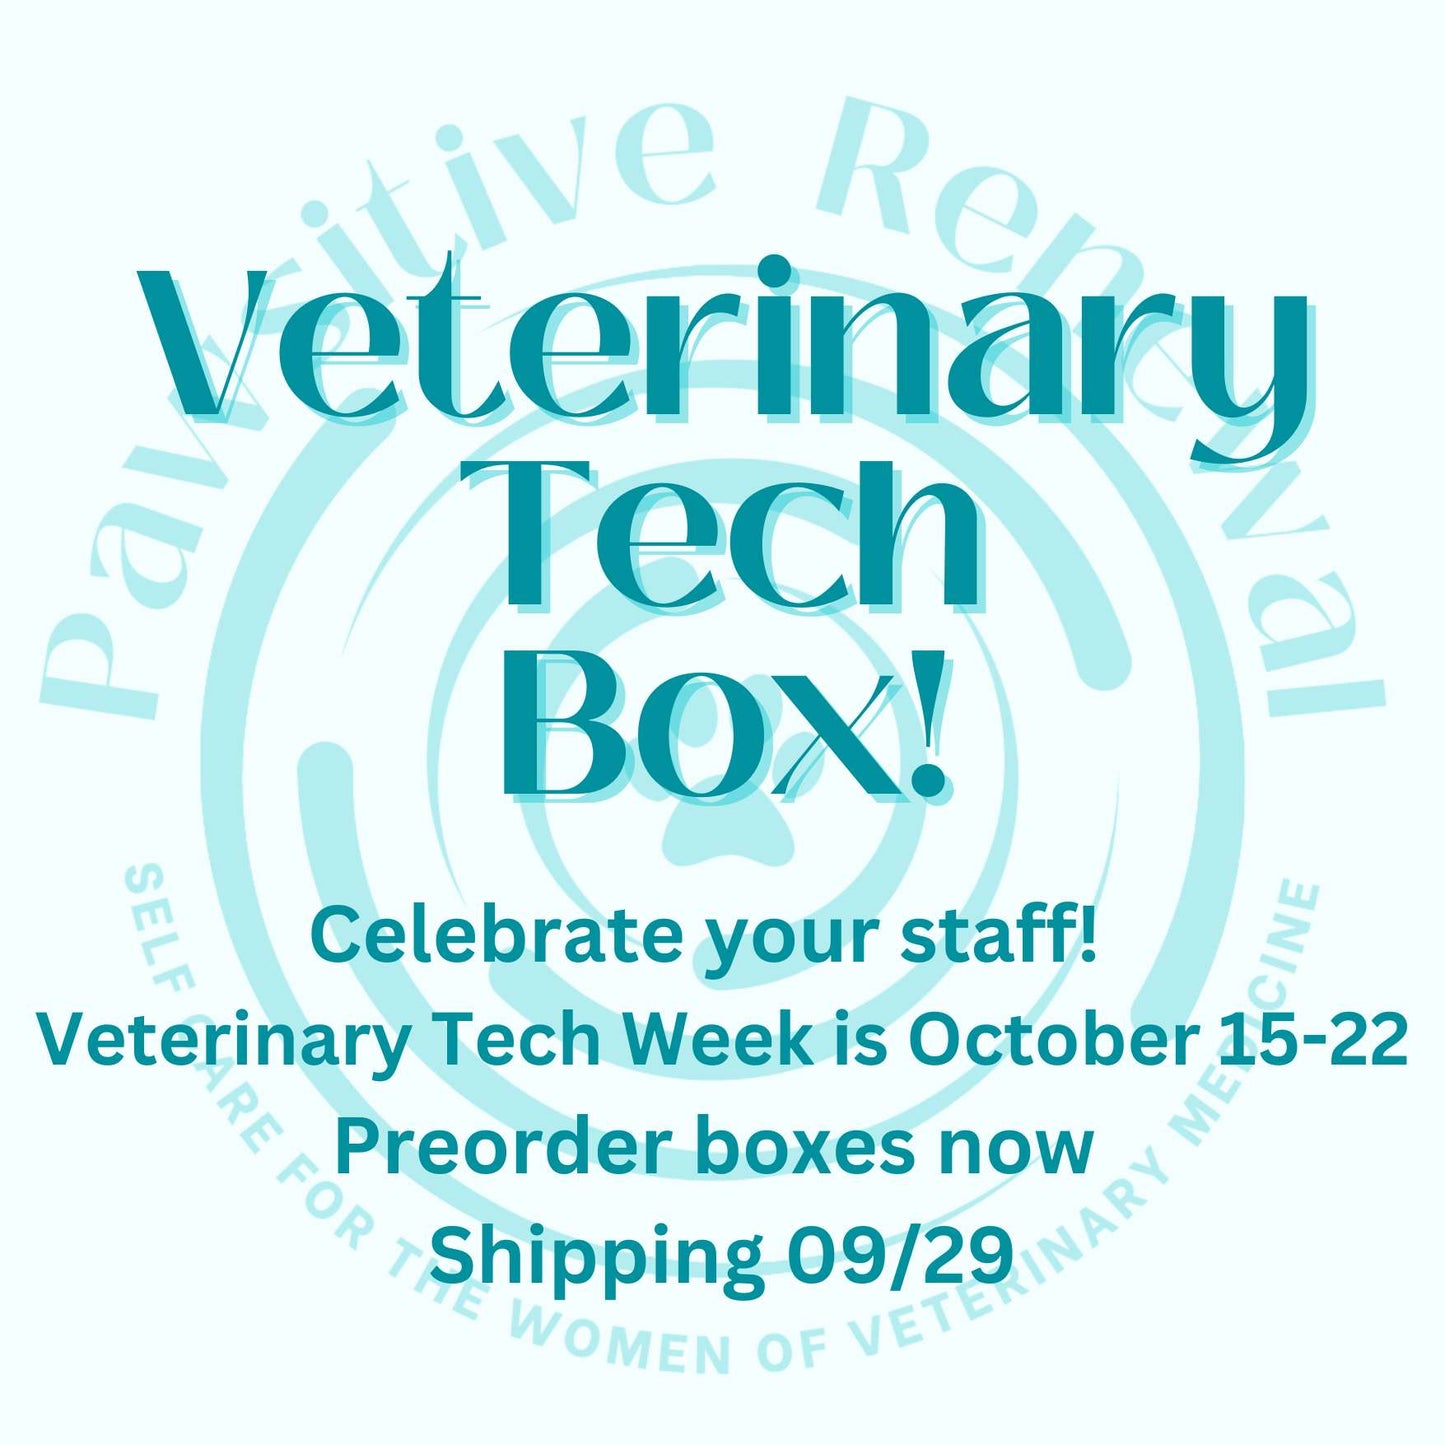 Veterinary Tech Pawsitive Renewal Box - T shirt size EXTRA LARGE (XL)